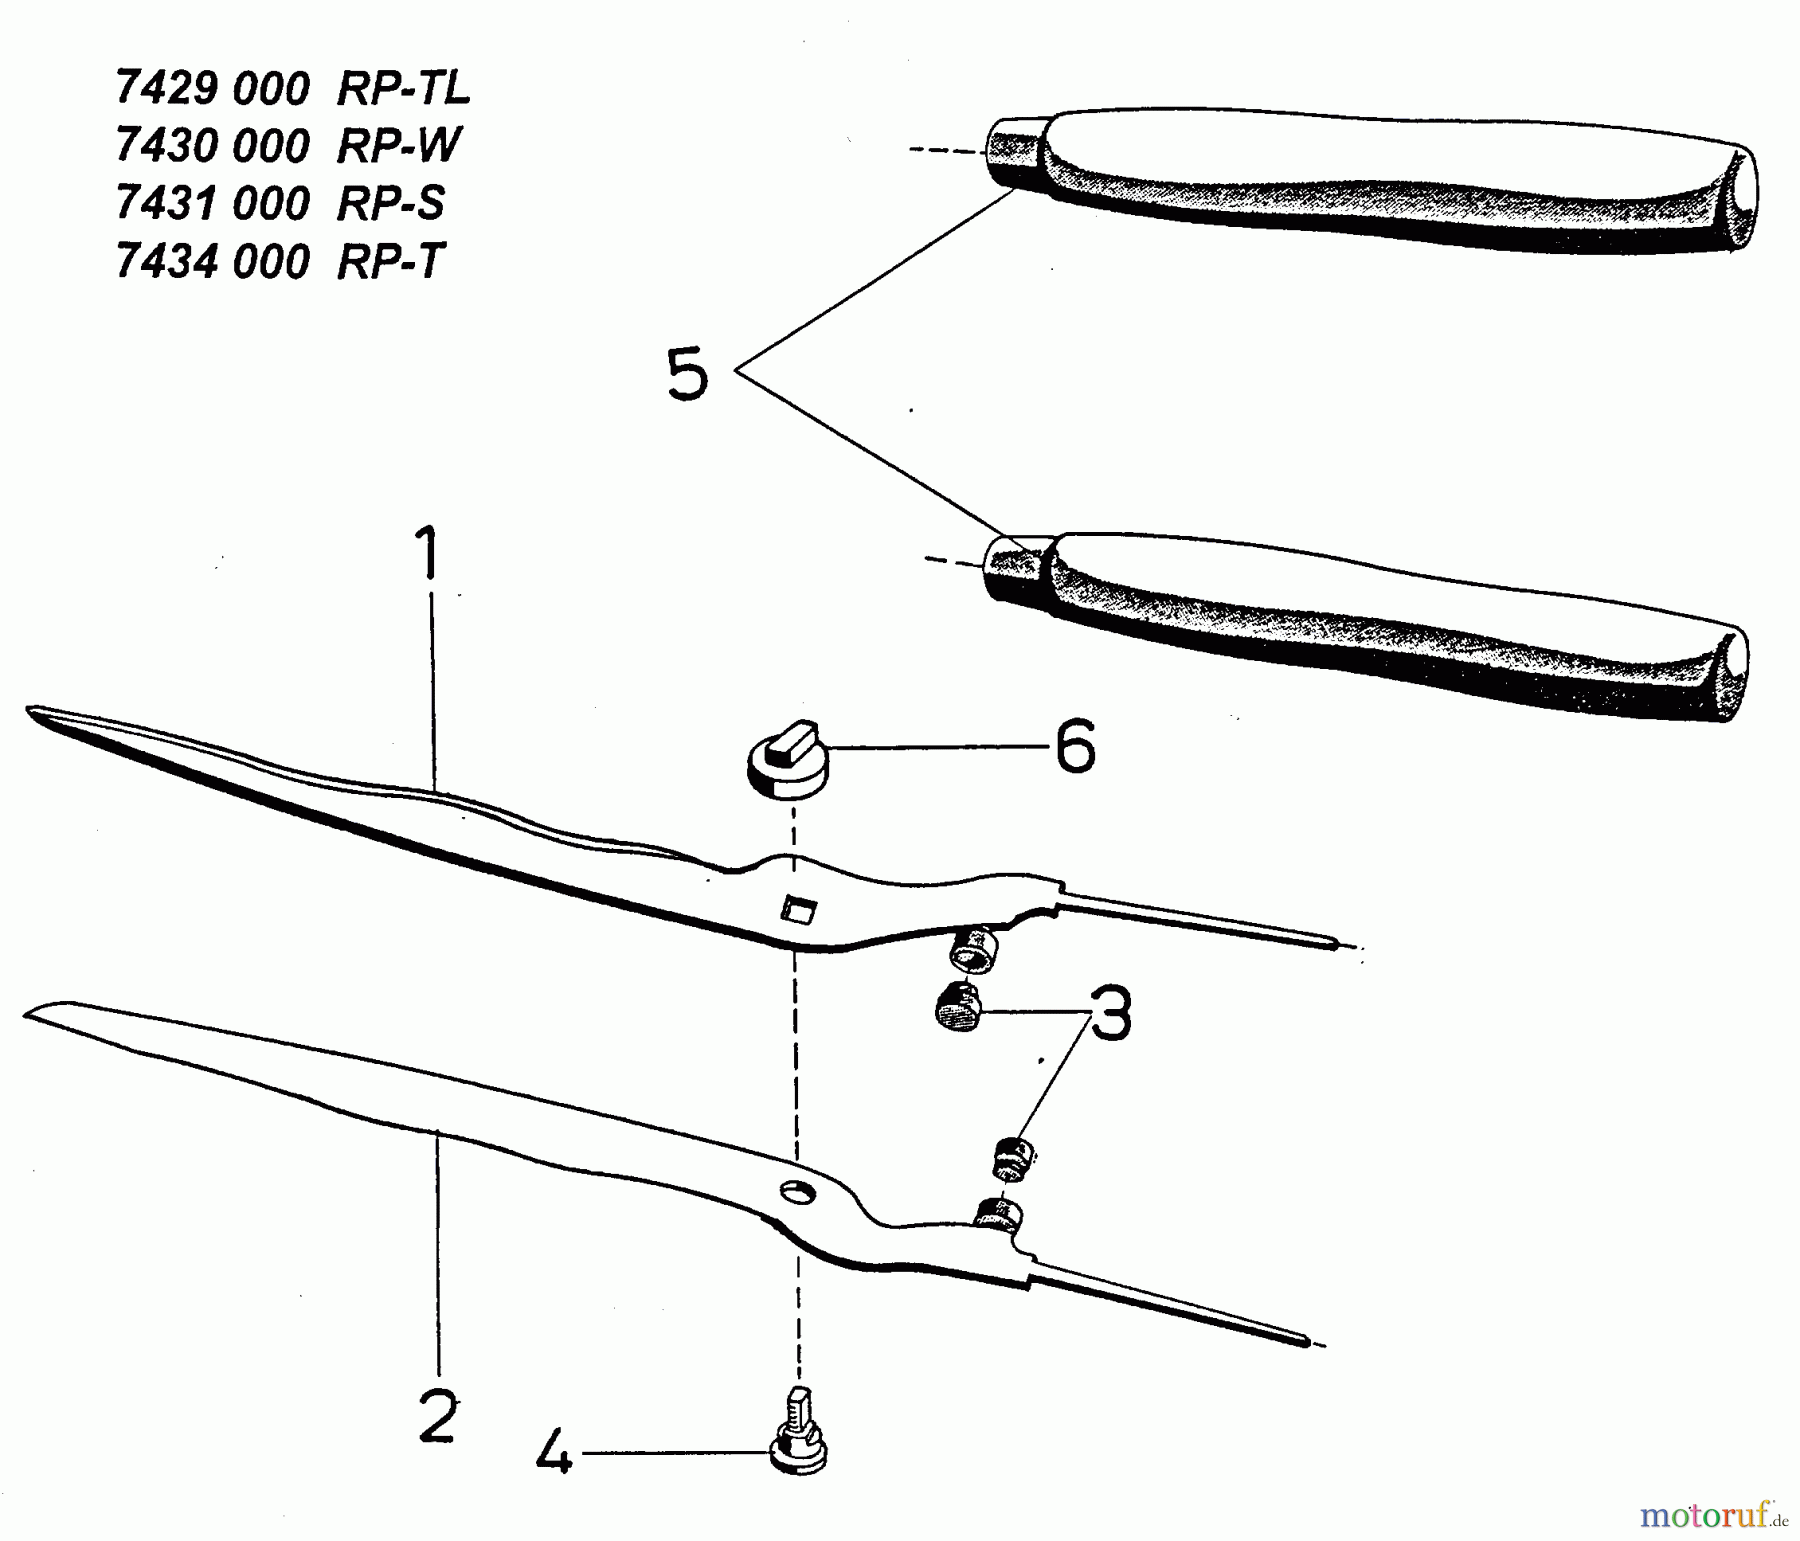  Wolf-Garten Hedge shears RP-TL 7429000  (1998) Basic machine